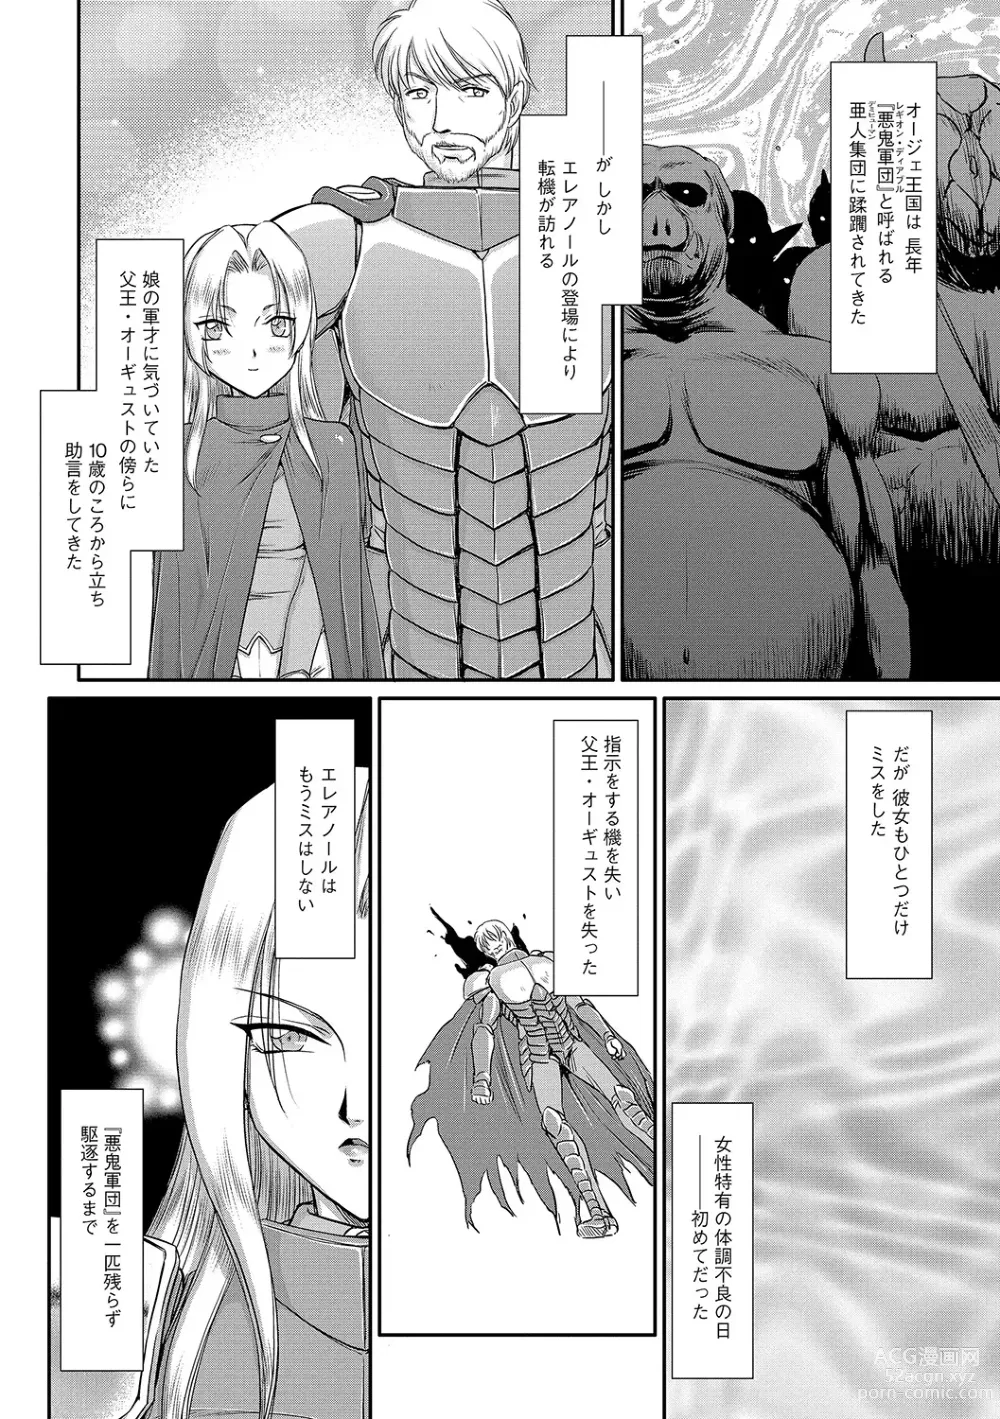 Page 6 of manga Hakudaku Senki Eleanor